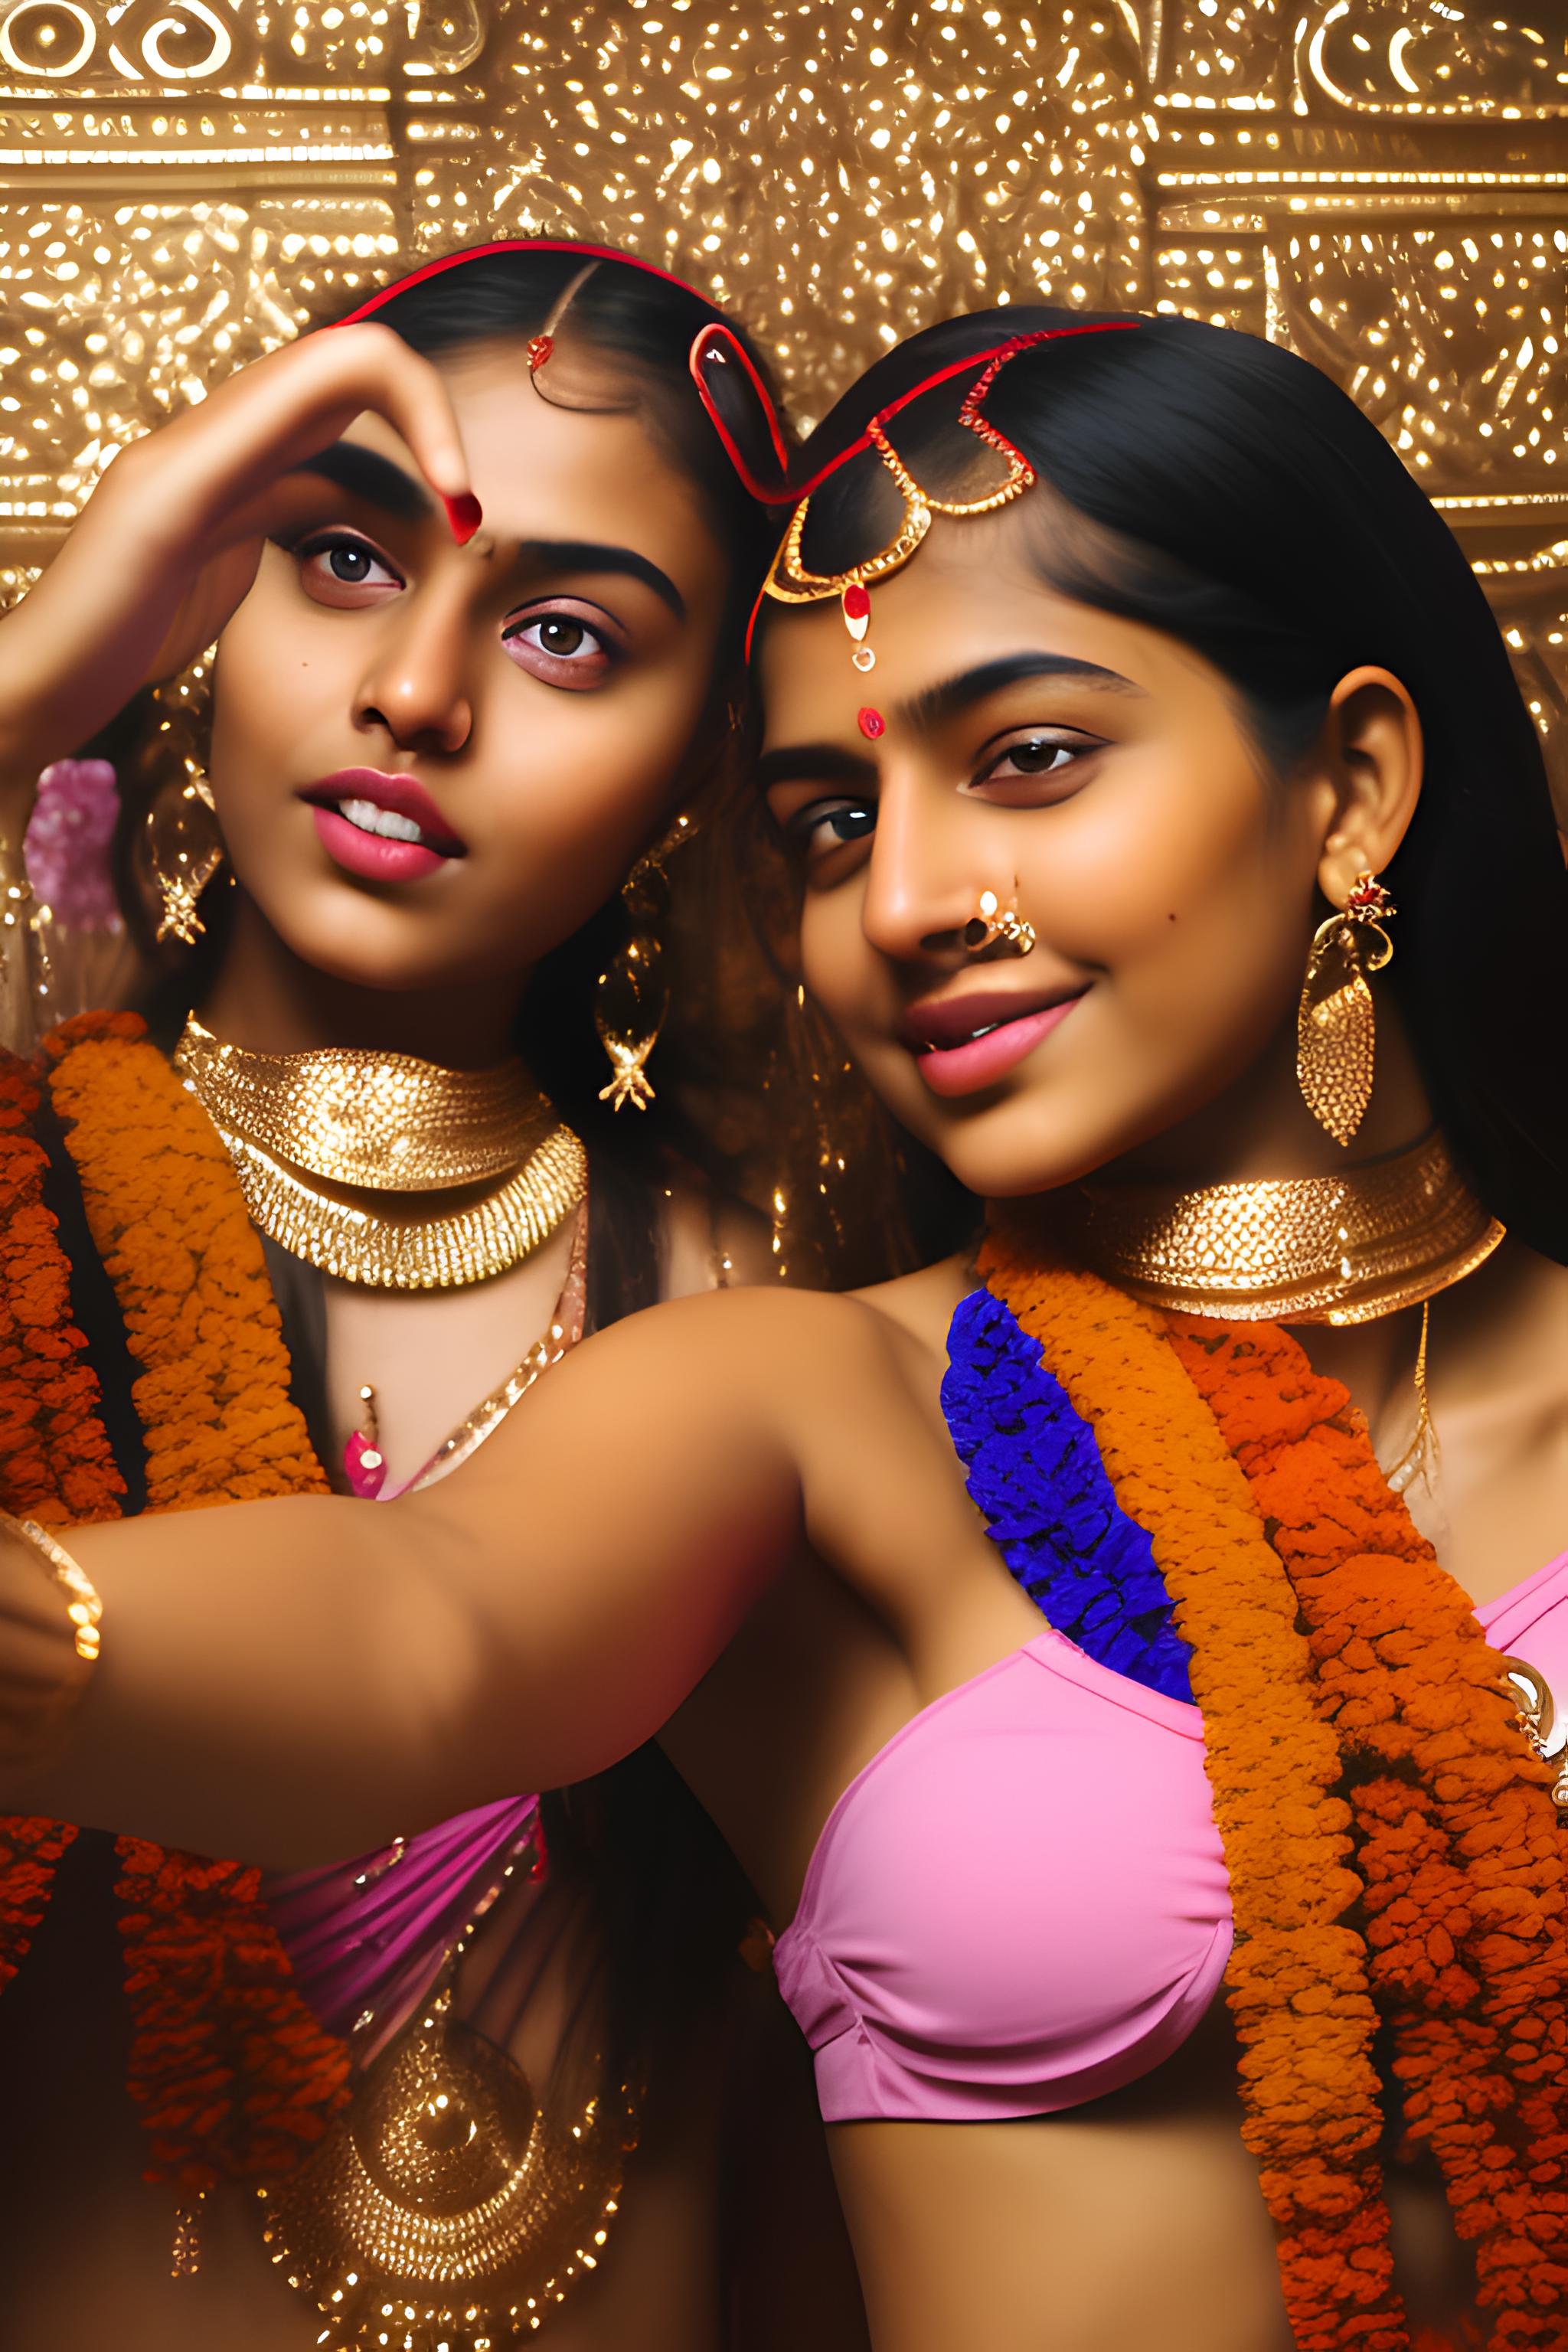 nude indian girls posing for a selfie in a public bathroom, hindu ...